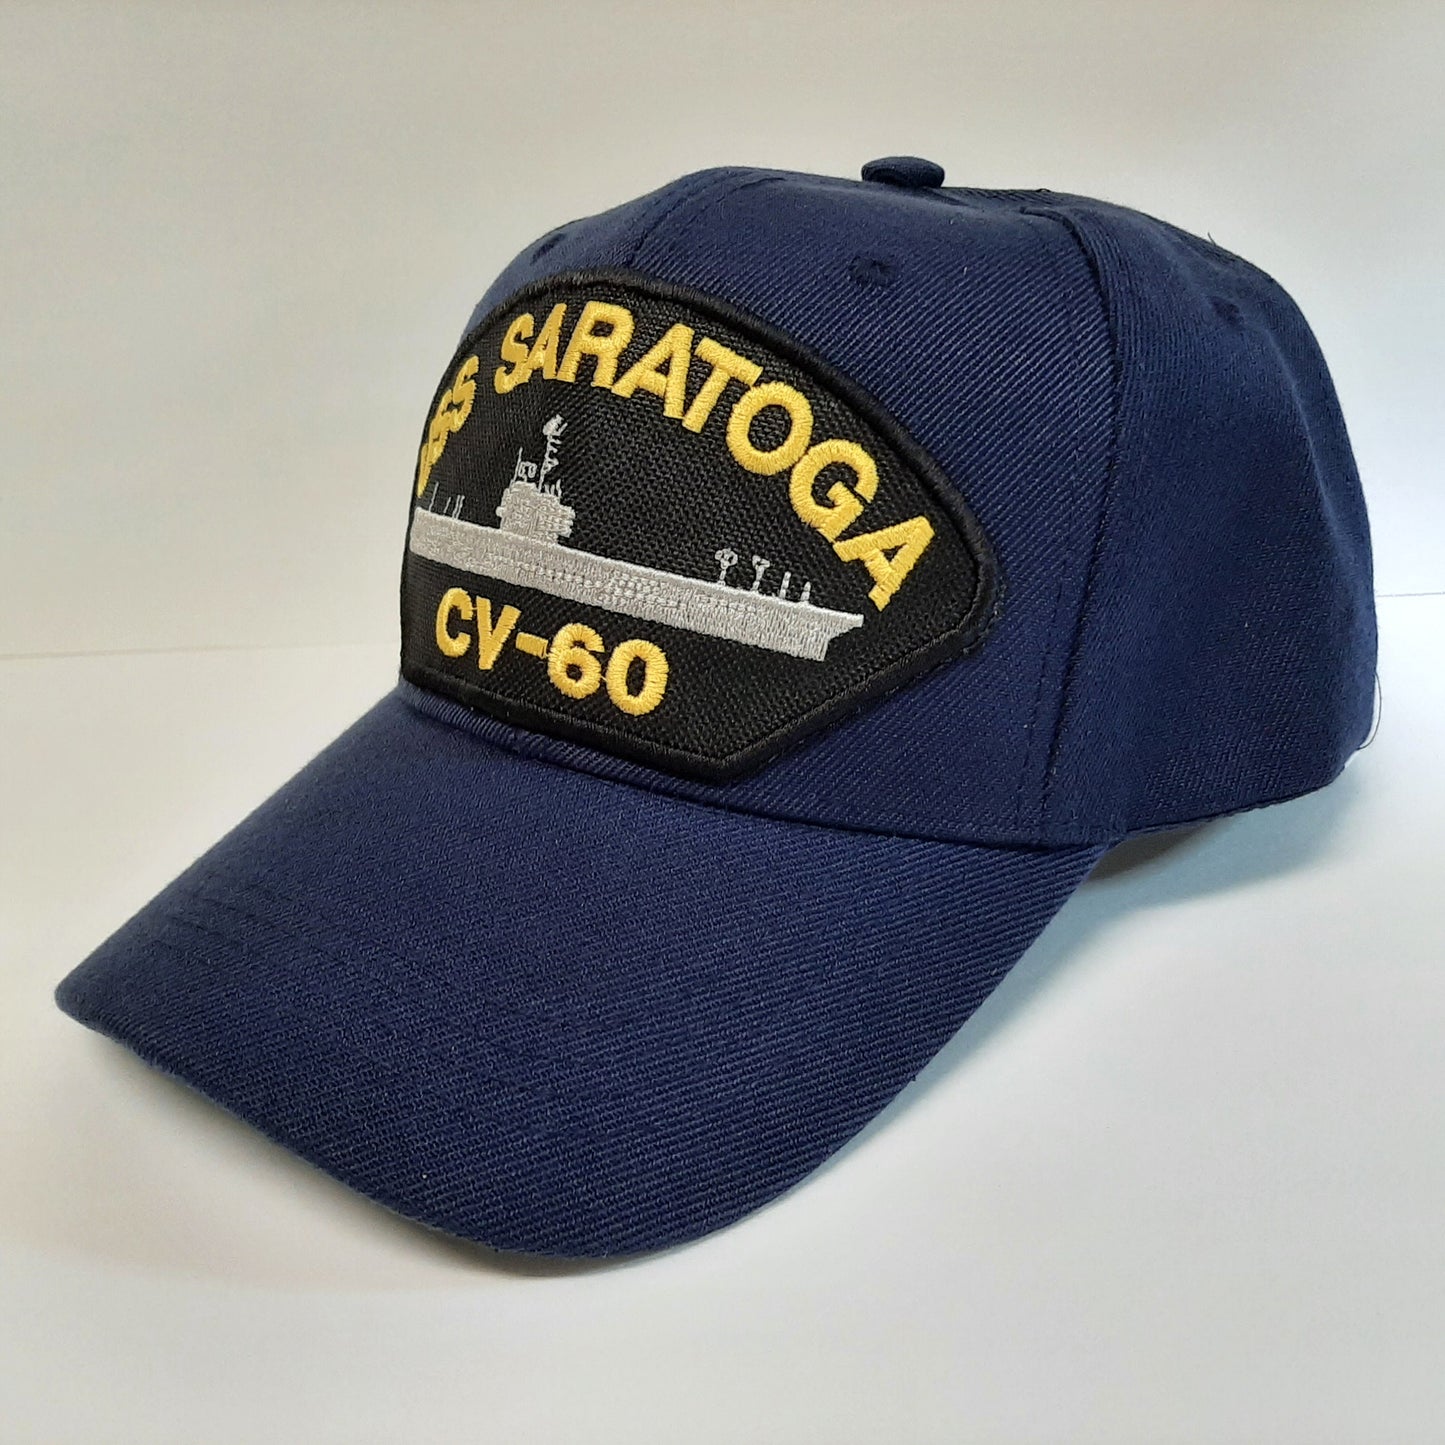 US Navy USS Saratoga CV-60 Men's Patch Cap Hat Navy Blue Acrylic